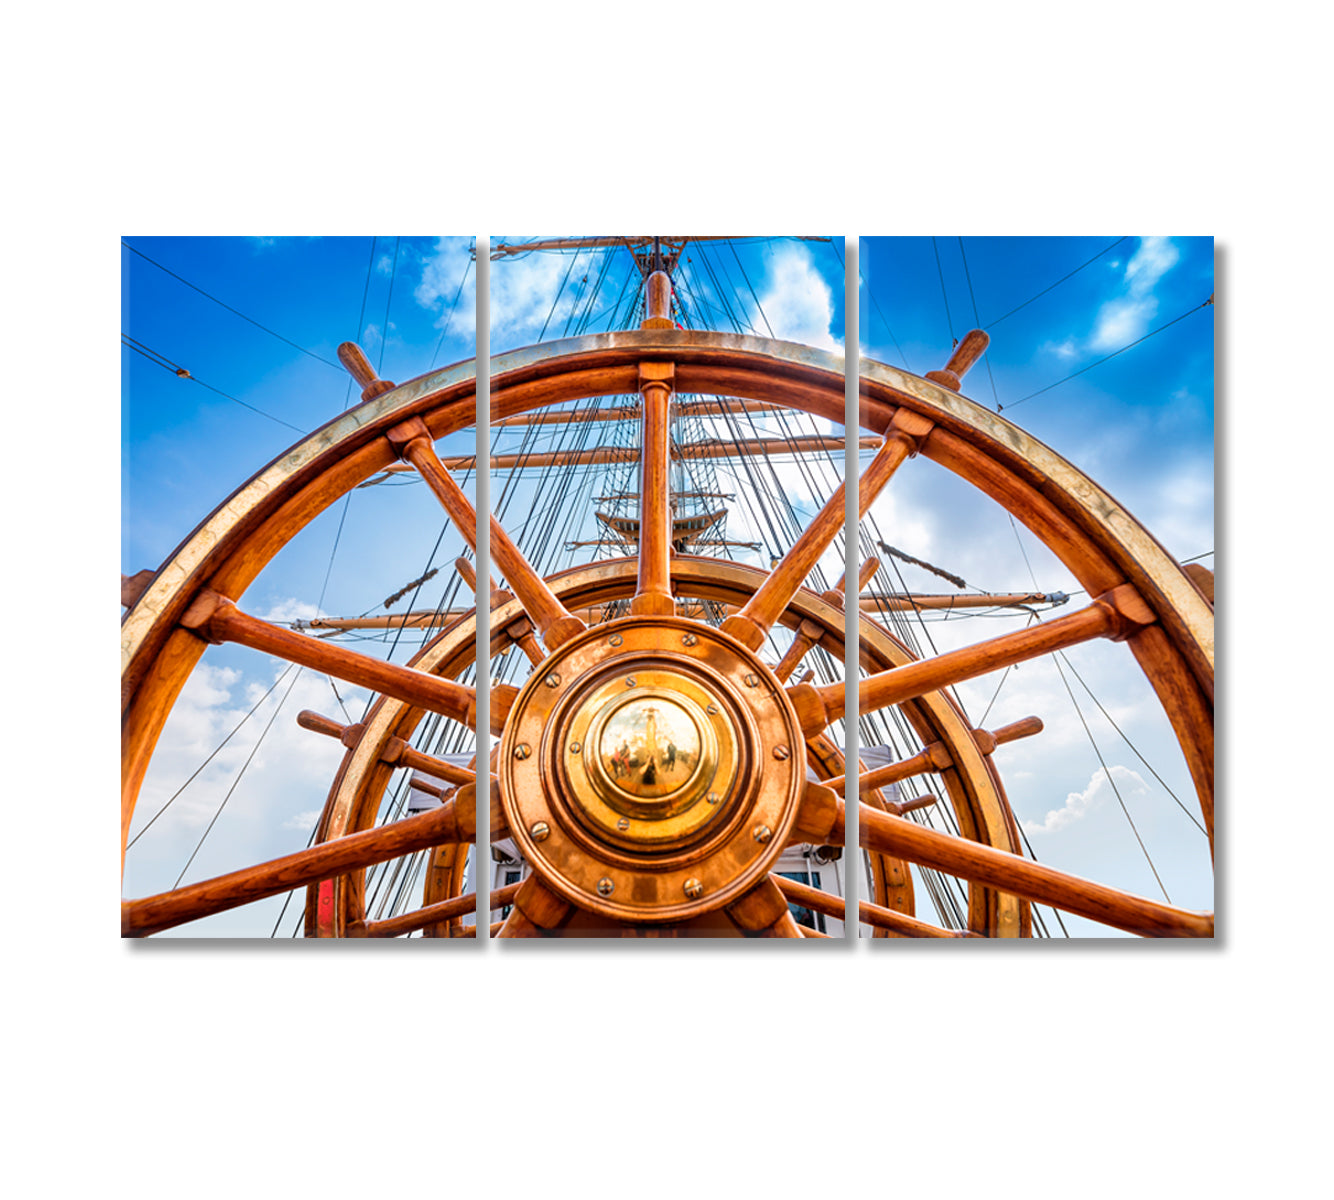 Ship's Wheel Canvas Print-Canvas Print-CetArt-3 Panels-36x24 inches-CetArt